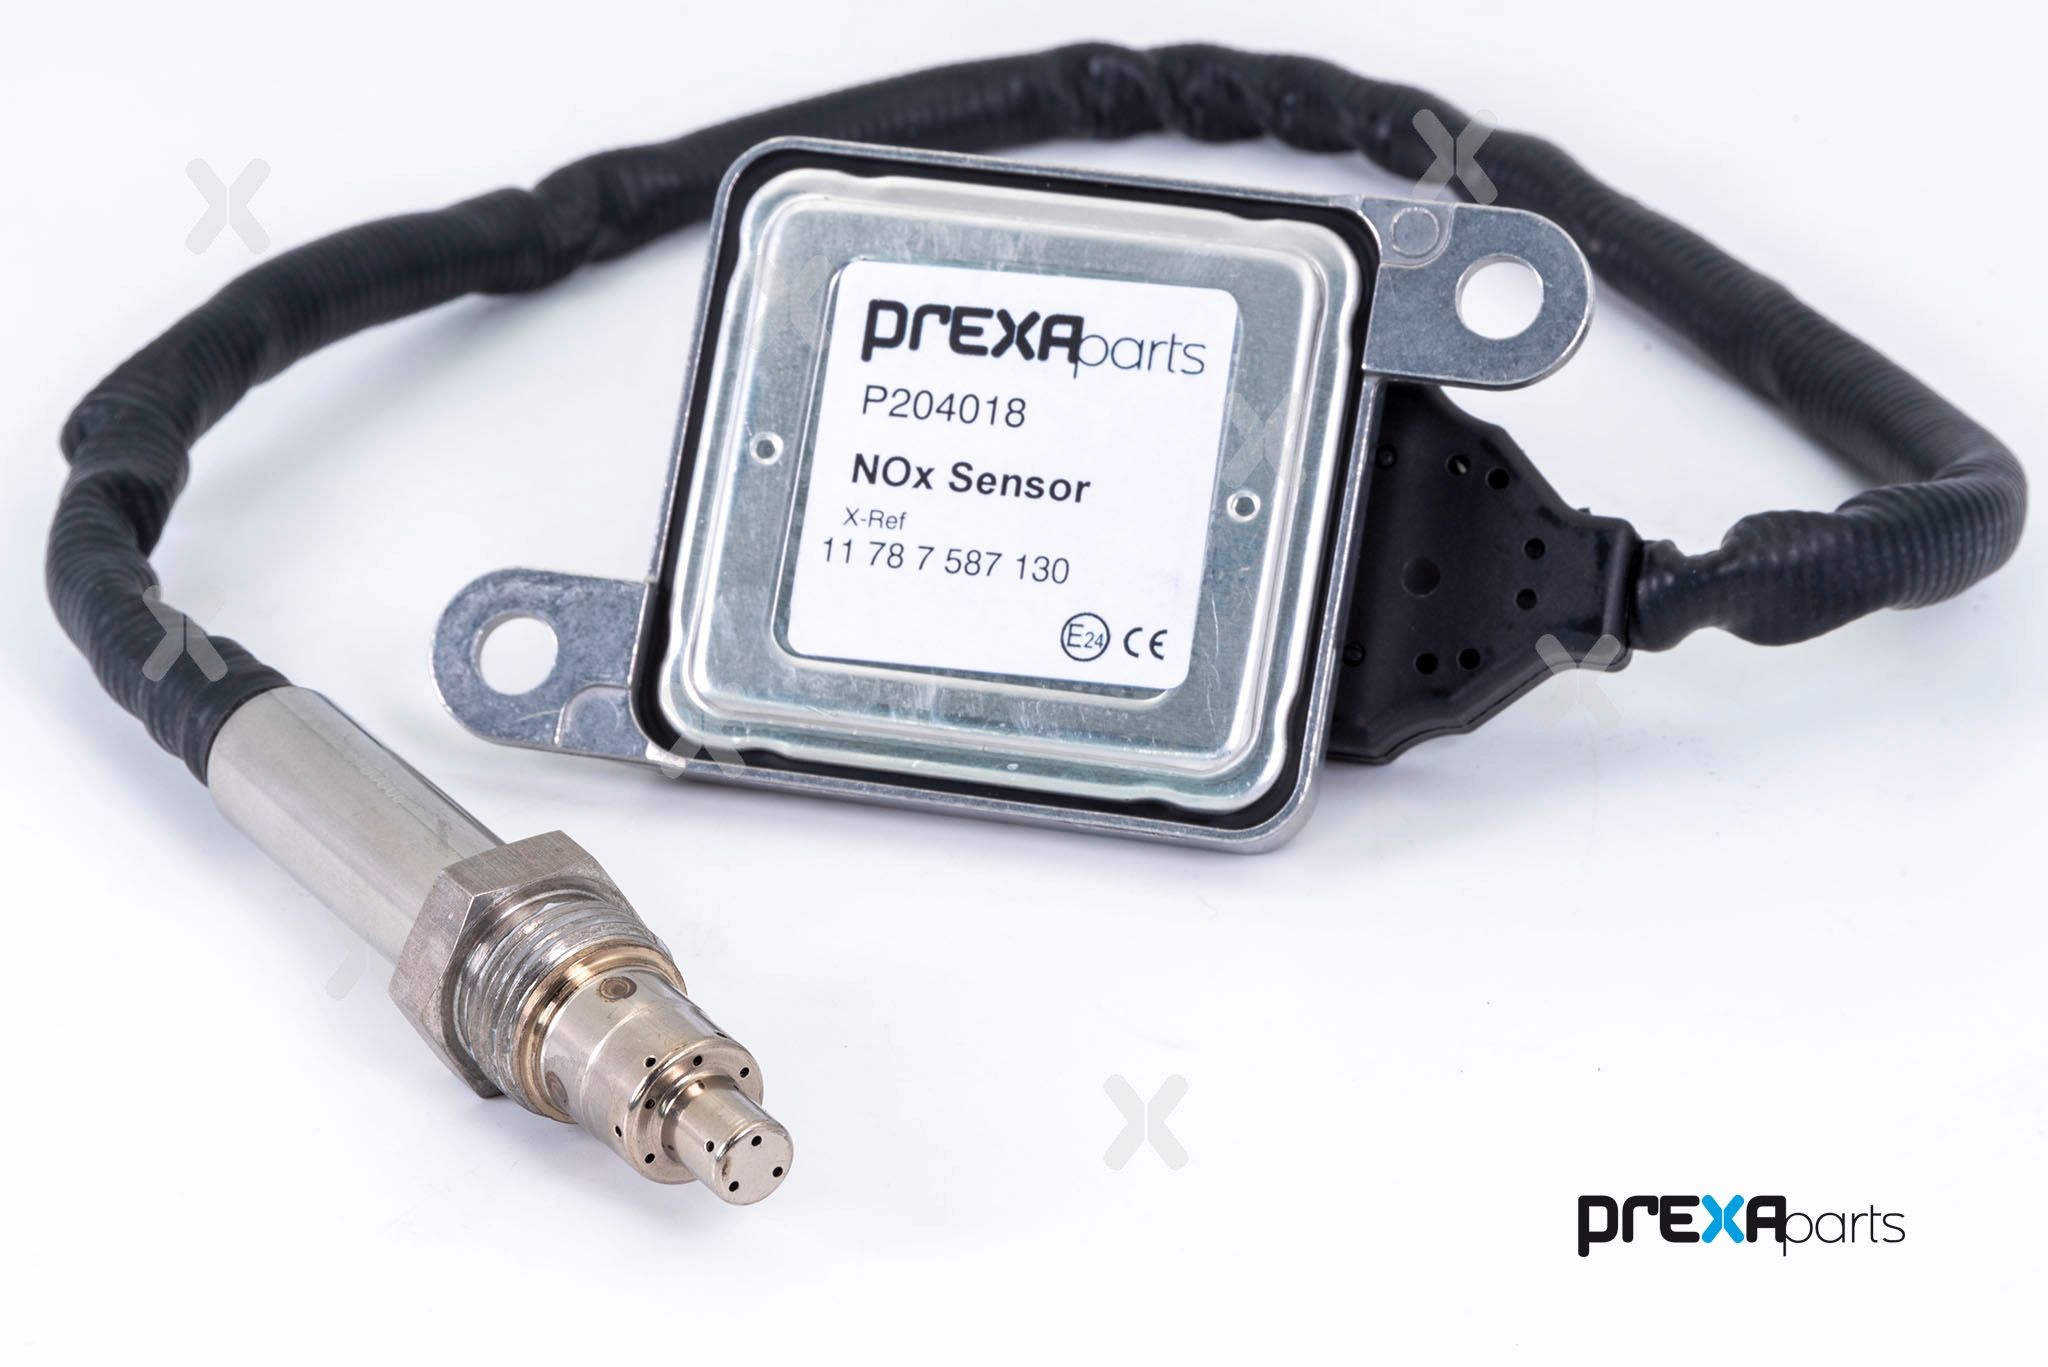 PREXAparts P204018 NOx Sensor, NOx Catalyst 11 78 7 587 130